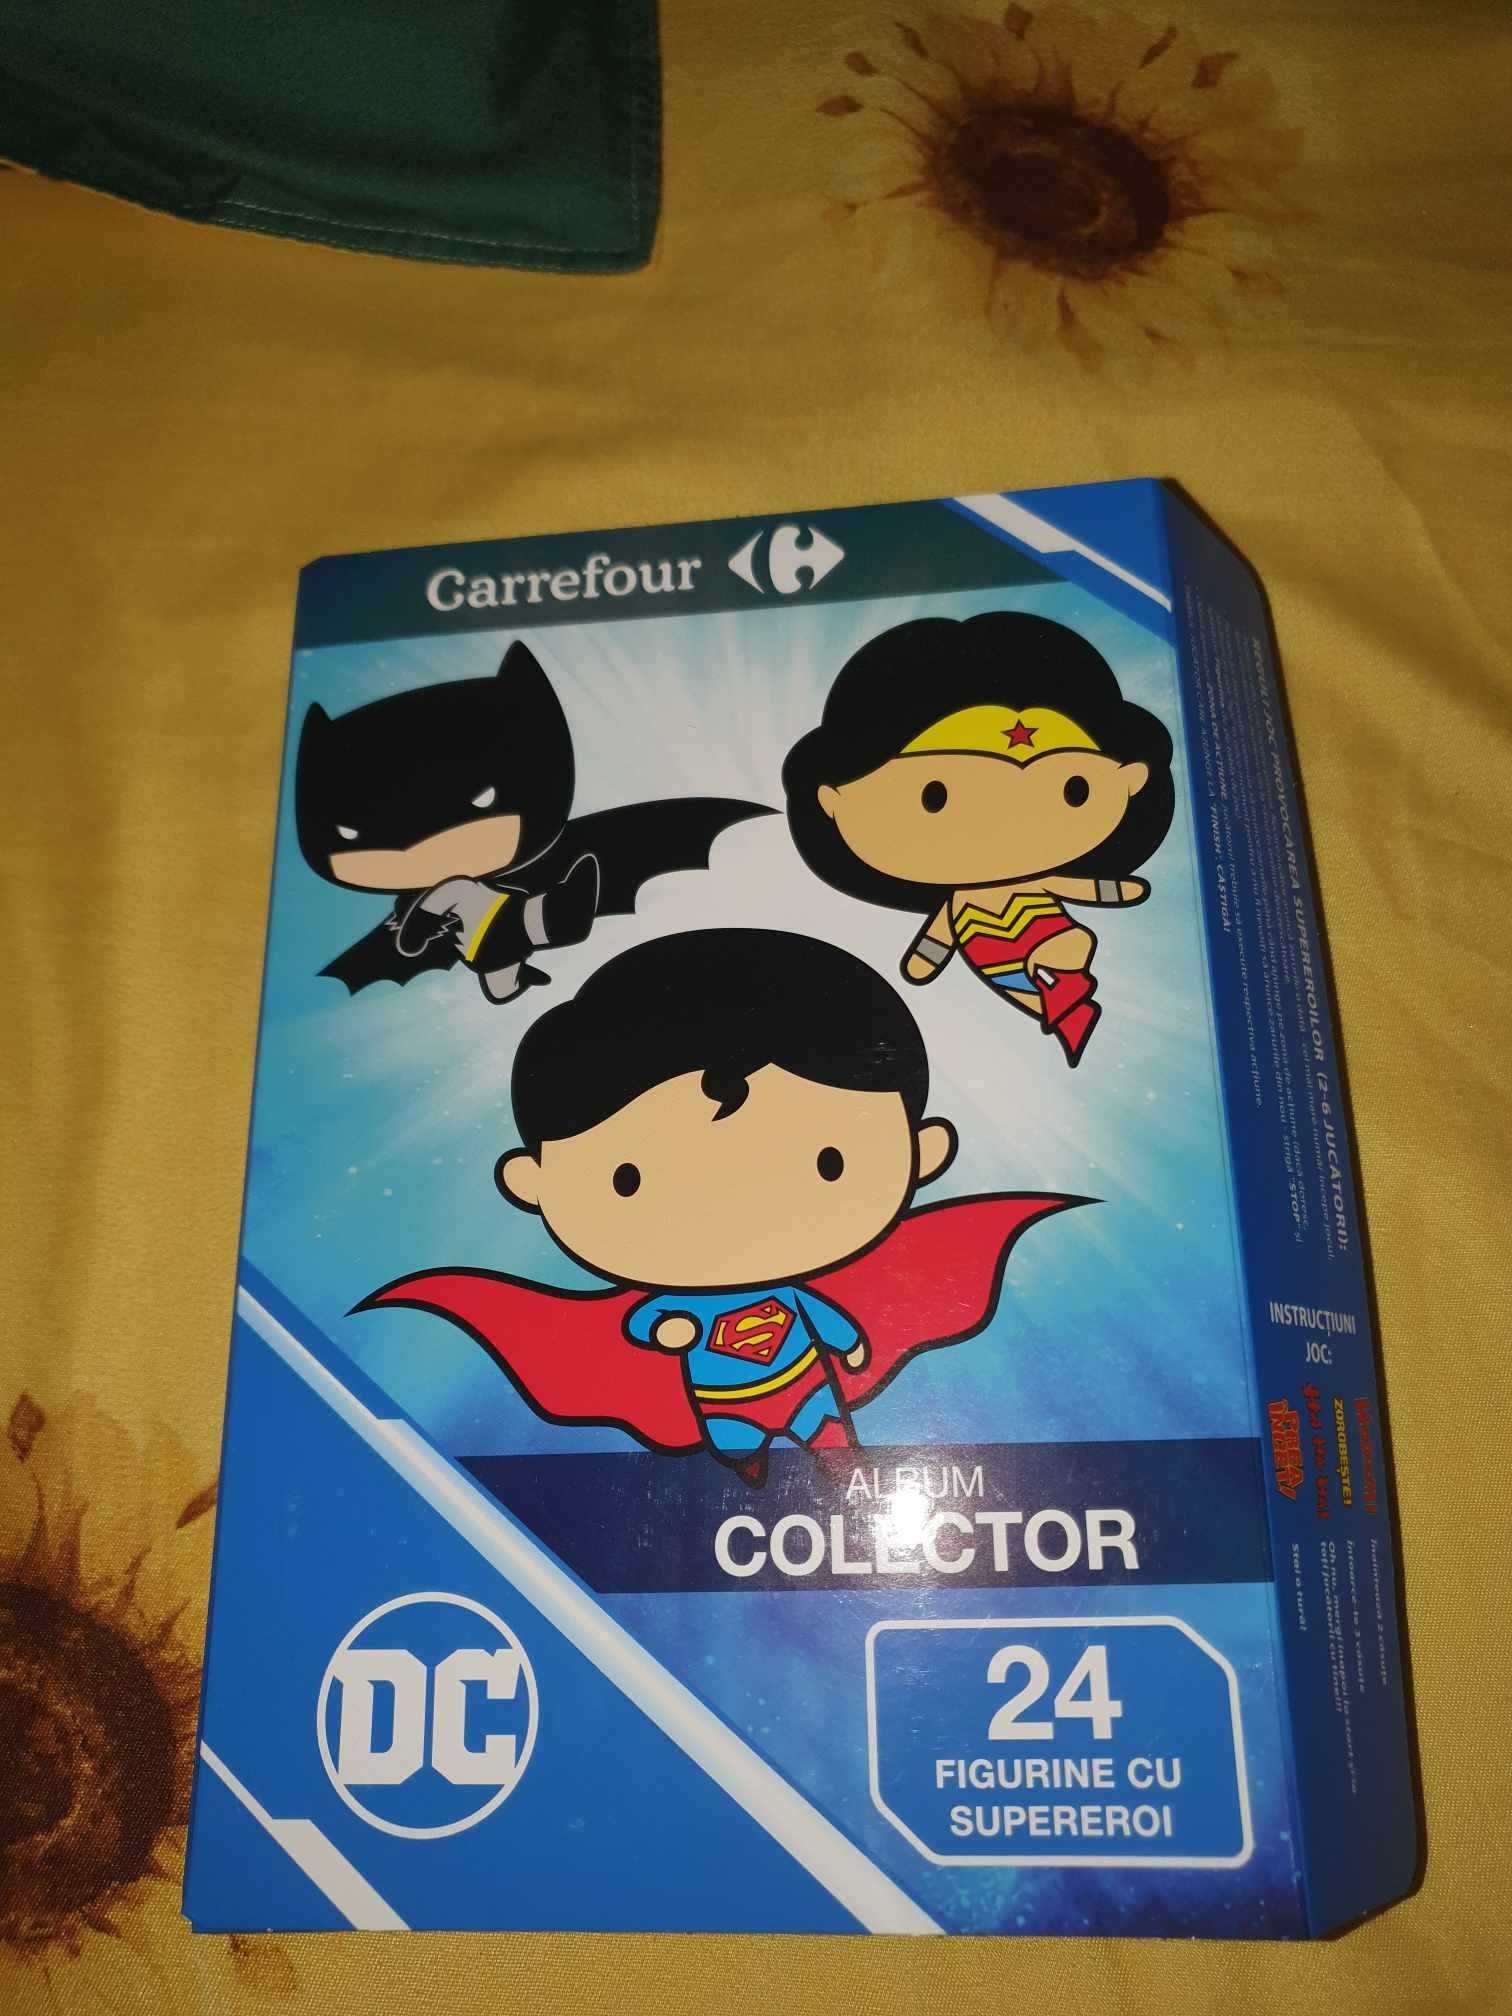 Figurine cu super eroi colectia DC